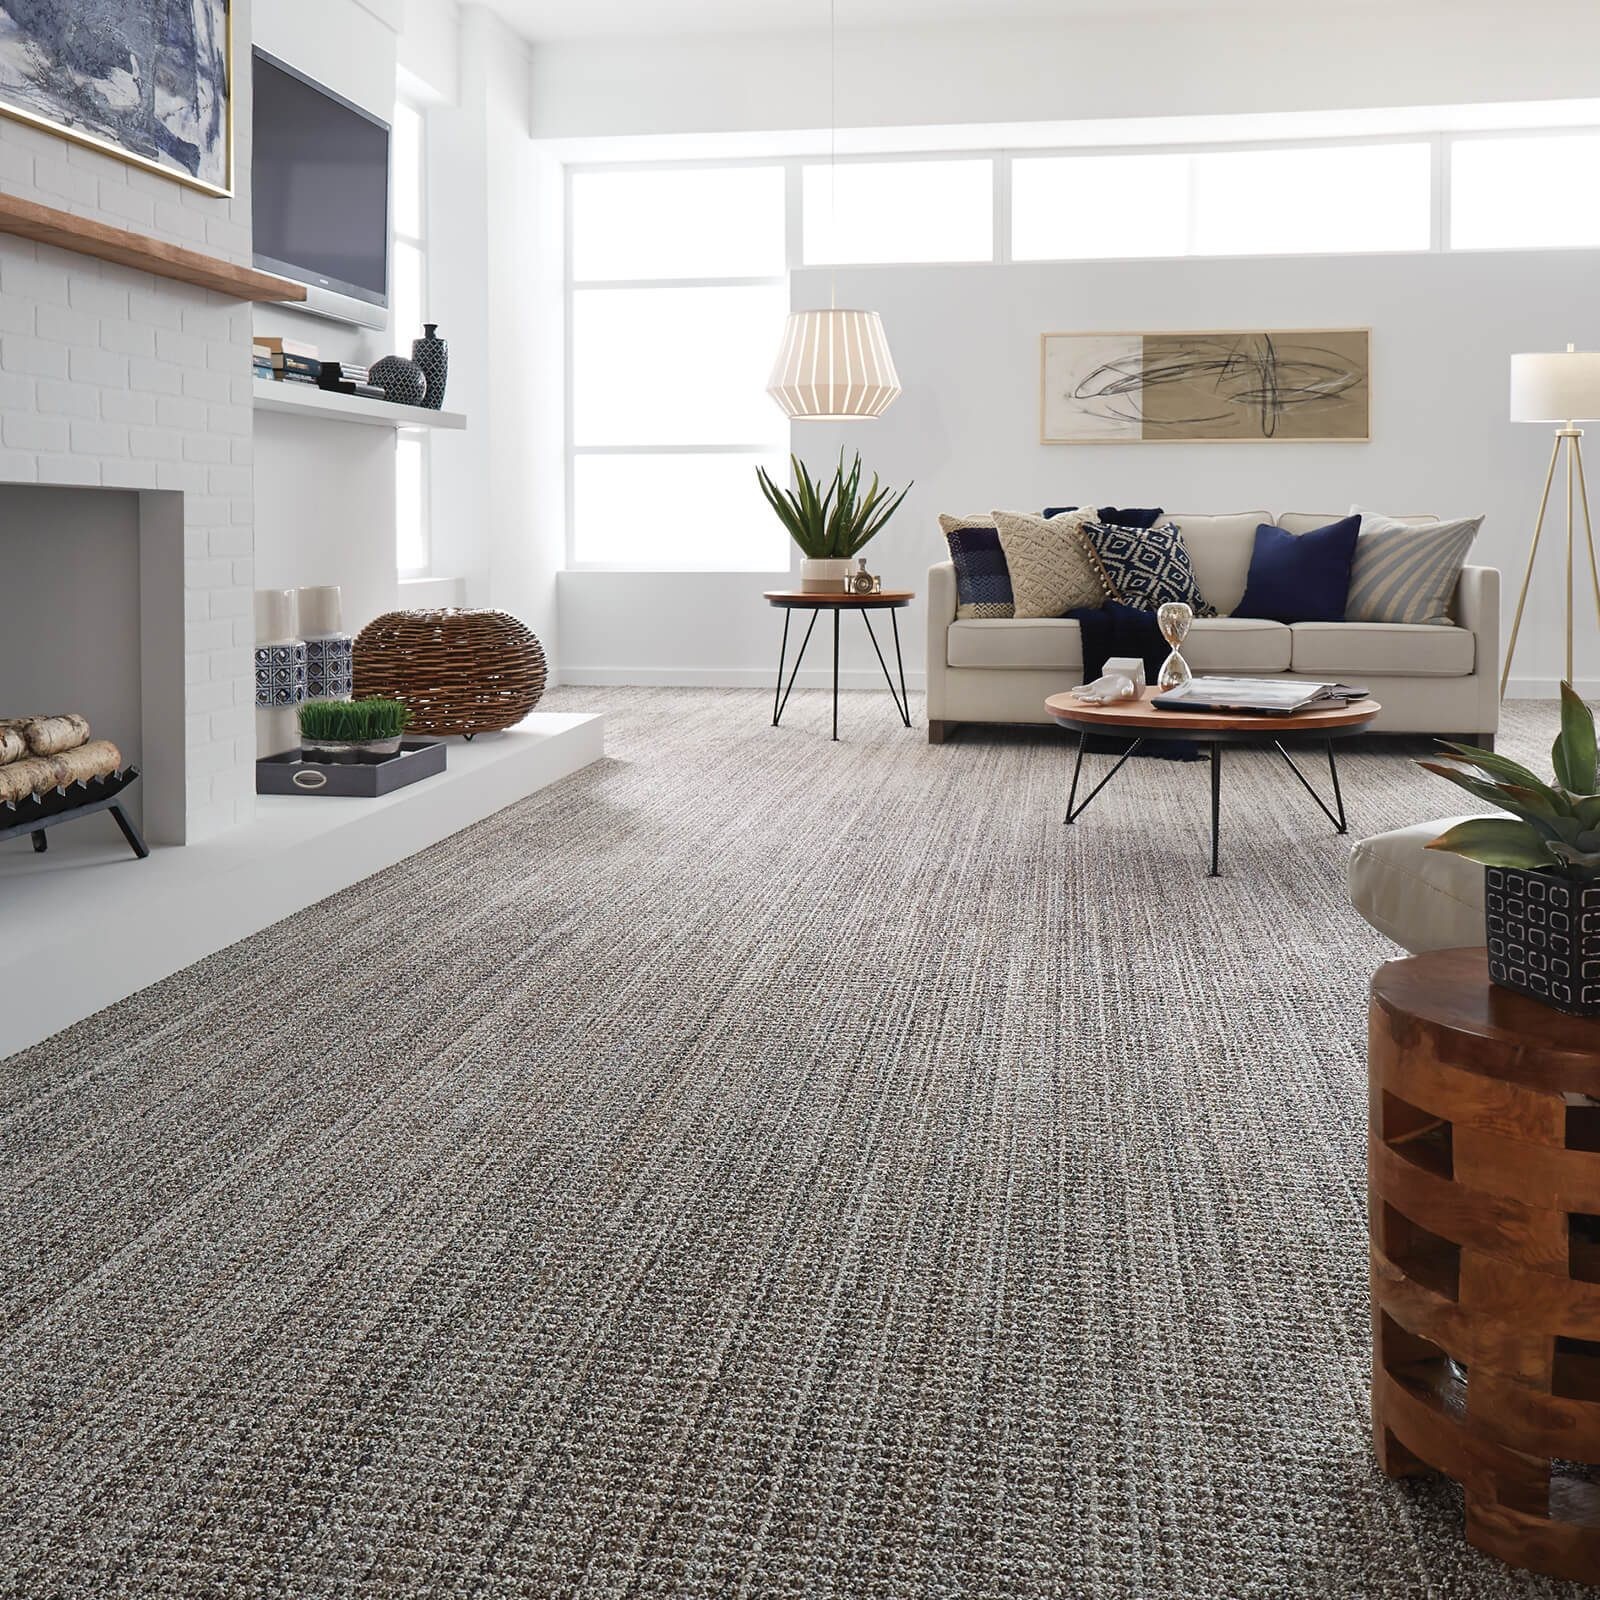 Textured Carpet | Hauptman Floor Covering Co Inc